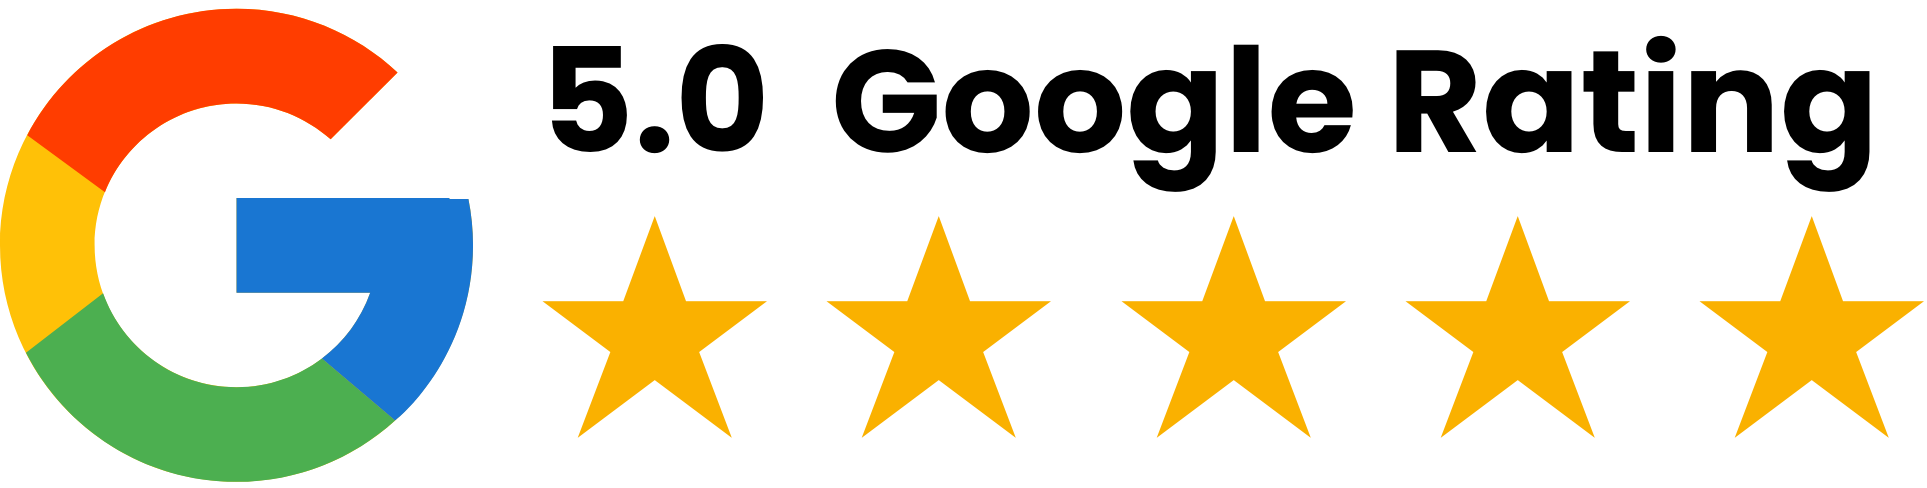 weekend dentistry google review rating